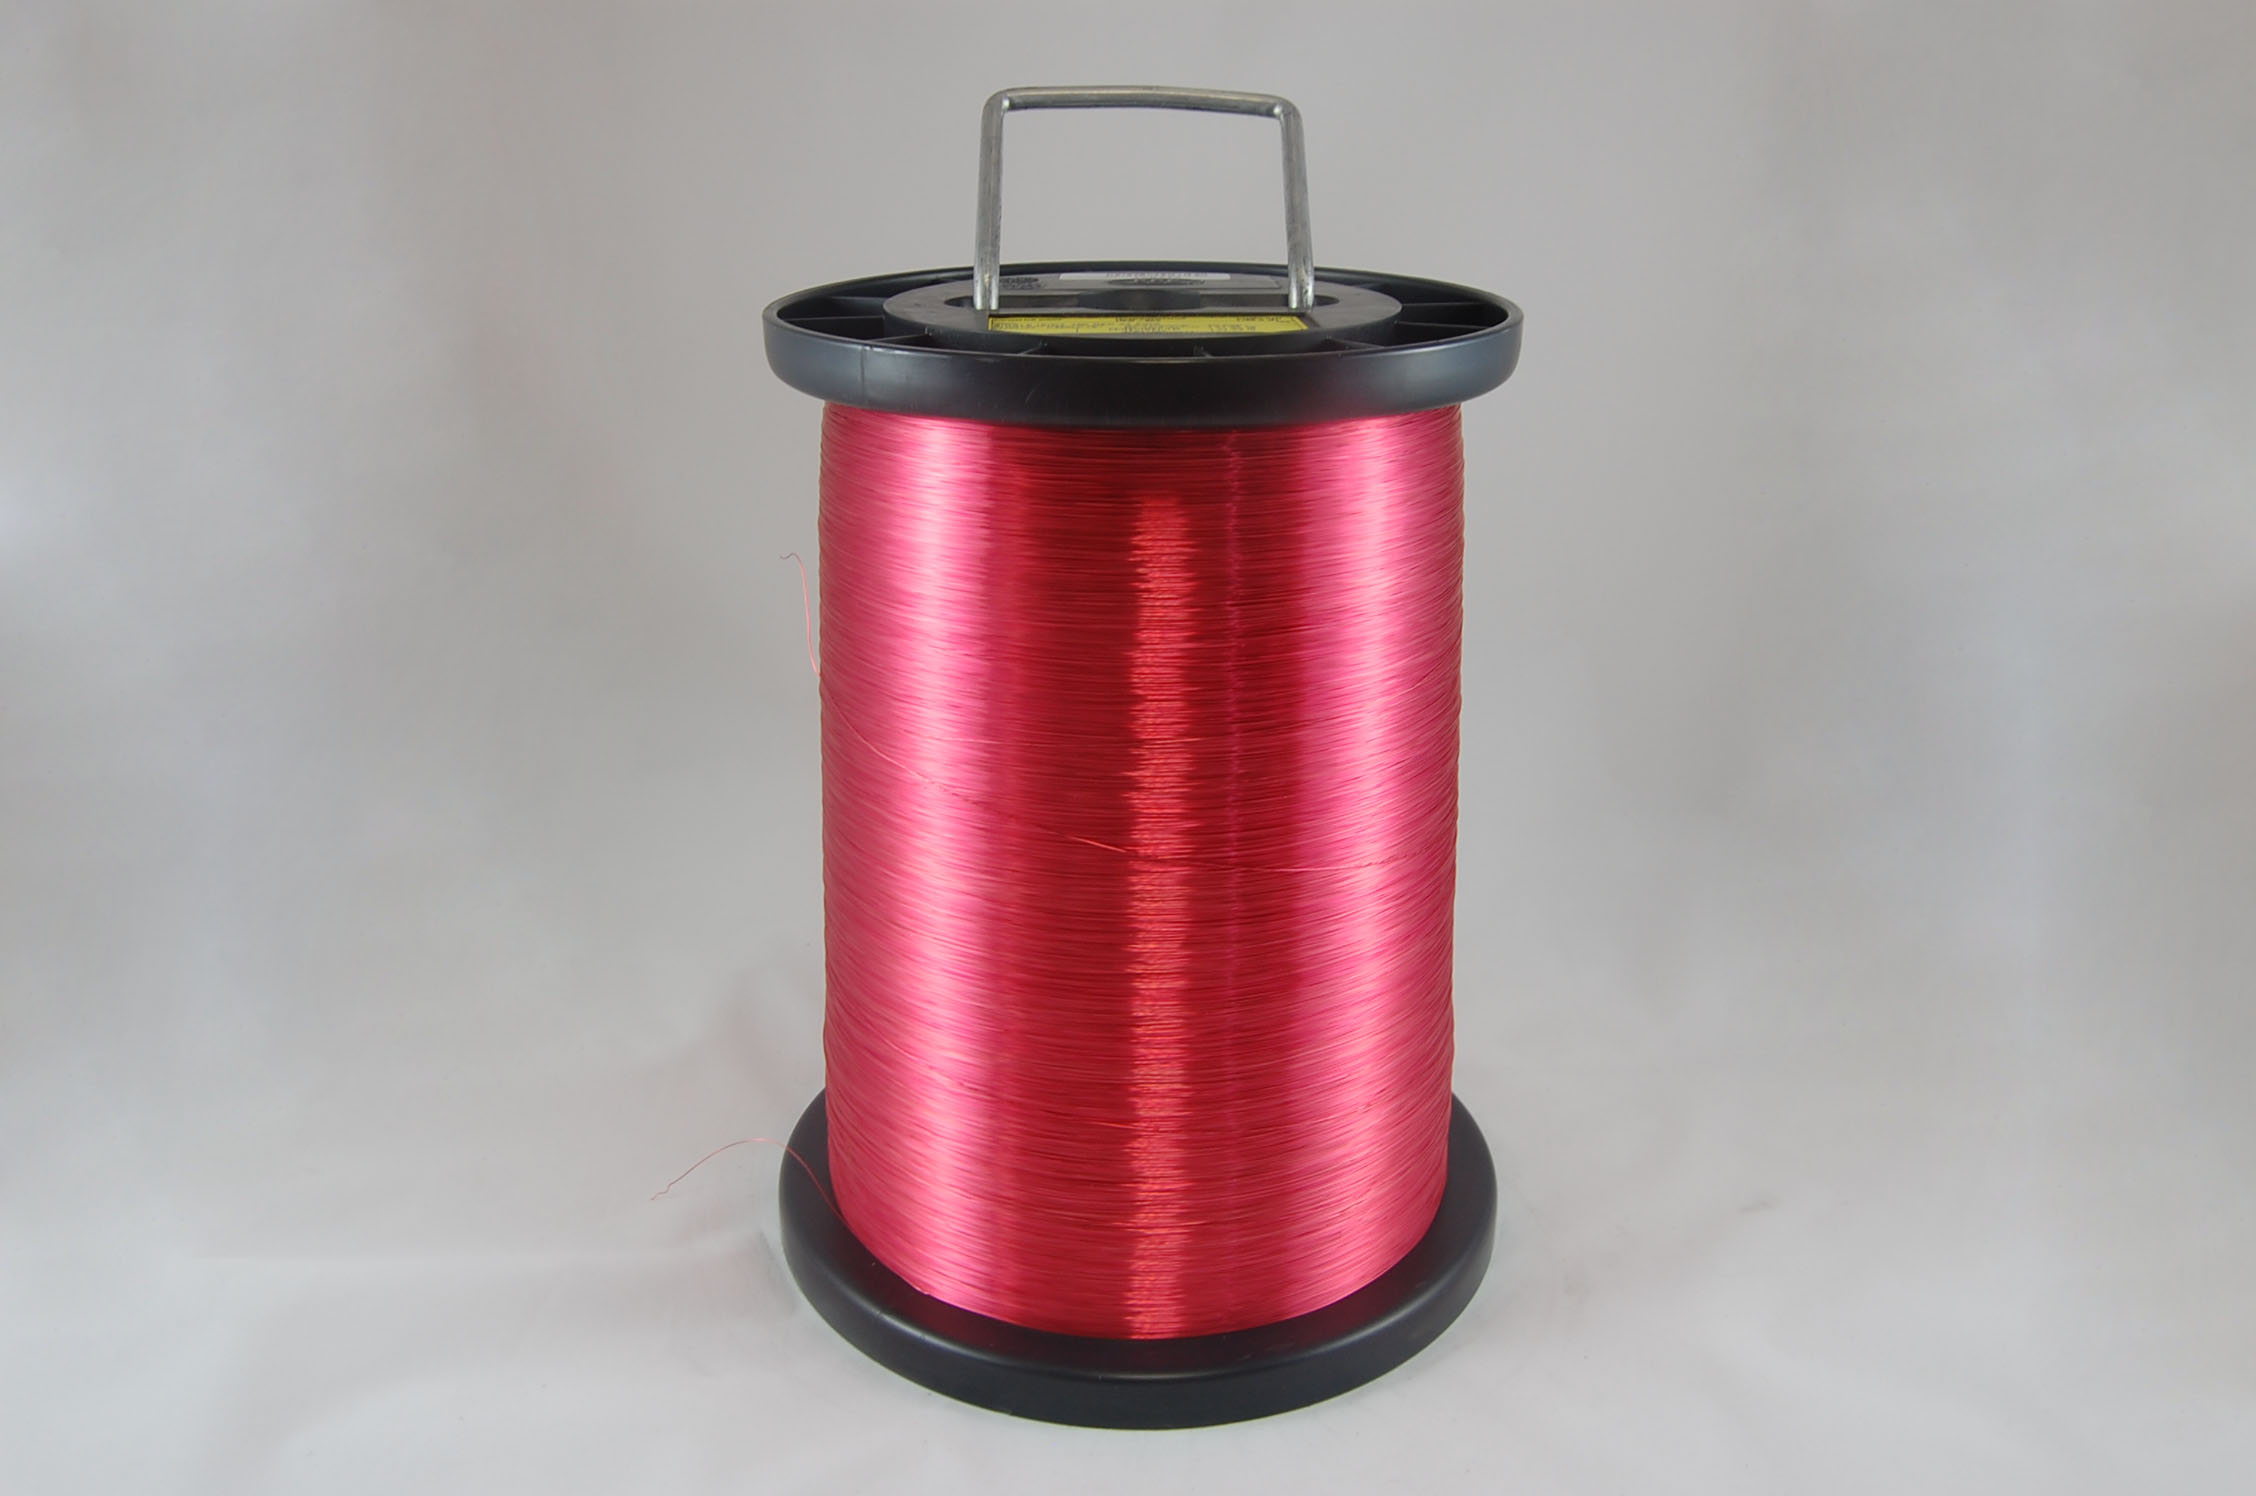 #13.5 Heavy INVEMID 200 Round MW 35 Copper Magnet Wire 200°C, copper, 45 LB half pack pail (average wght.)